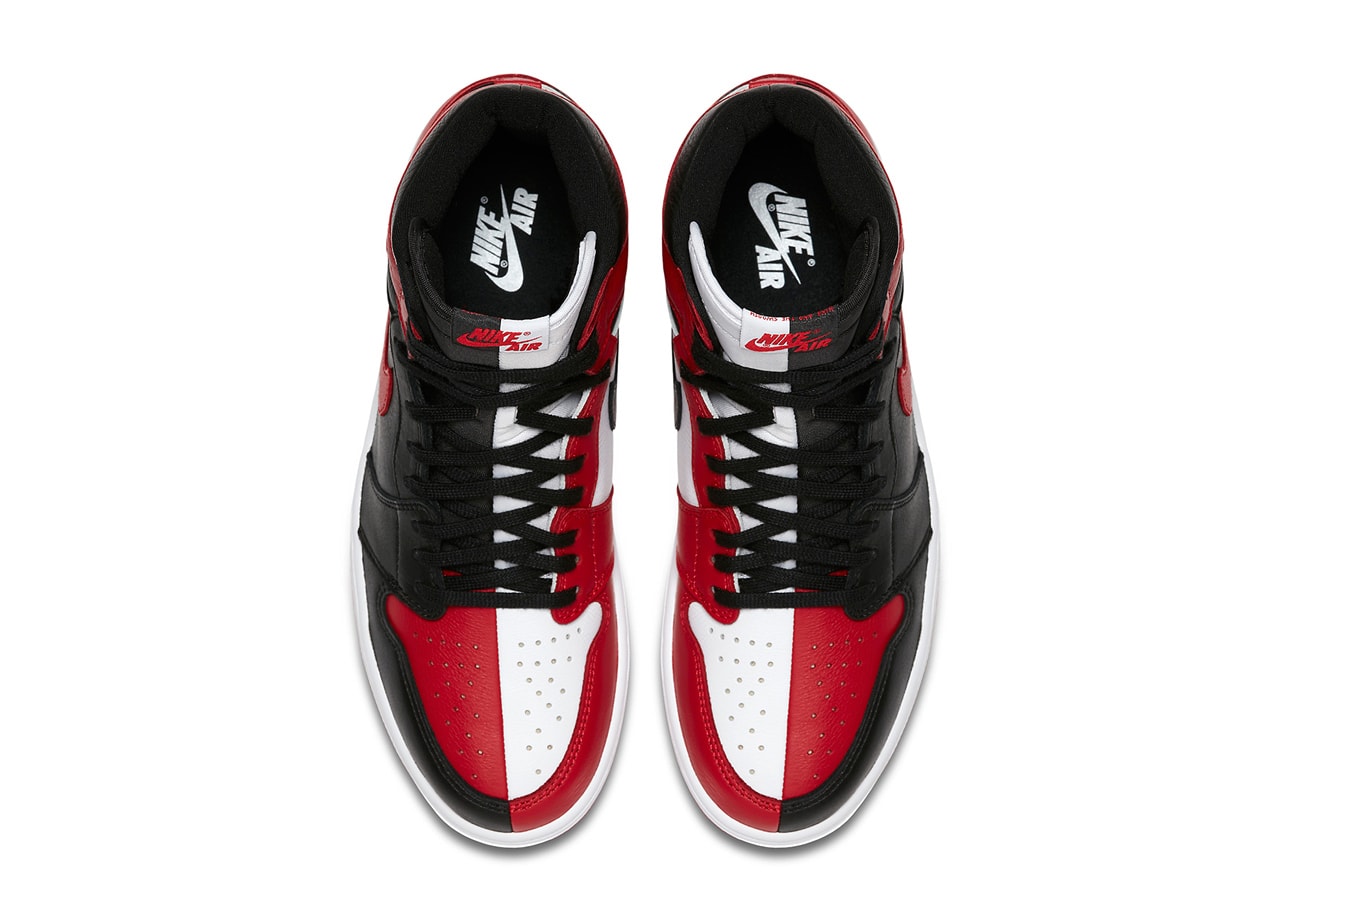 Air Jordan 1 Homage To Home Banned Chicago black red sneakers footwear release drop